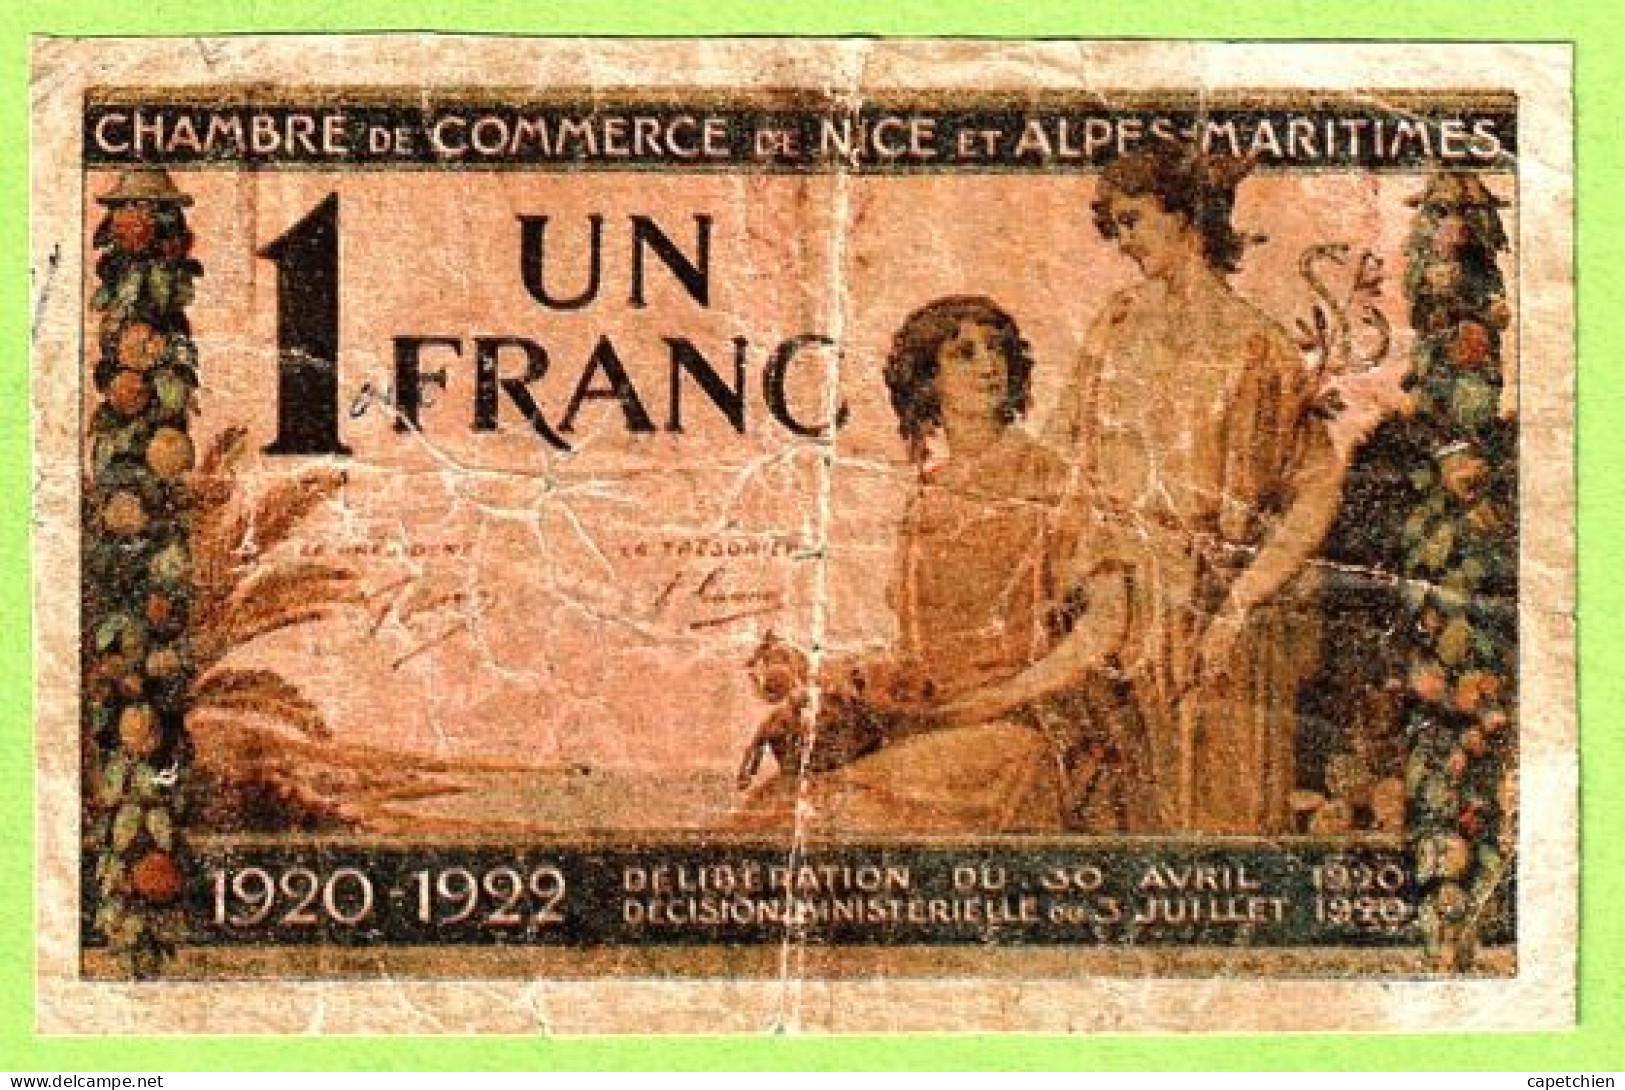 FRANCE / CHAMBRE De COMMERCE / NICE - ALPES MARITIMES / 1 FRANC / 30 AVRIL 1920 / N° 0.030.985 / SERIE 145 - Camera Di Commercio